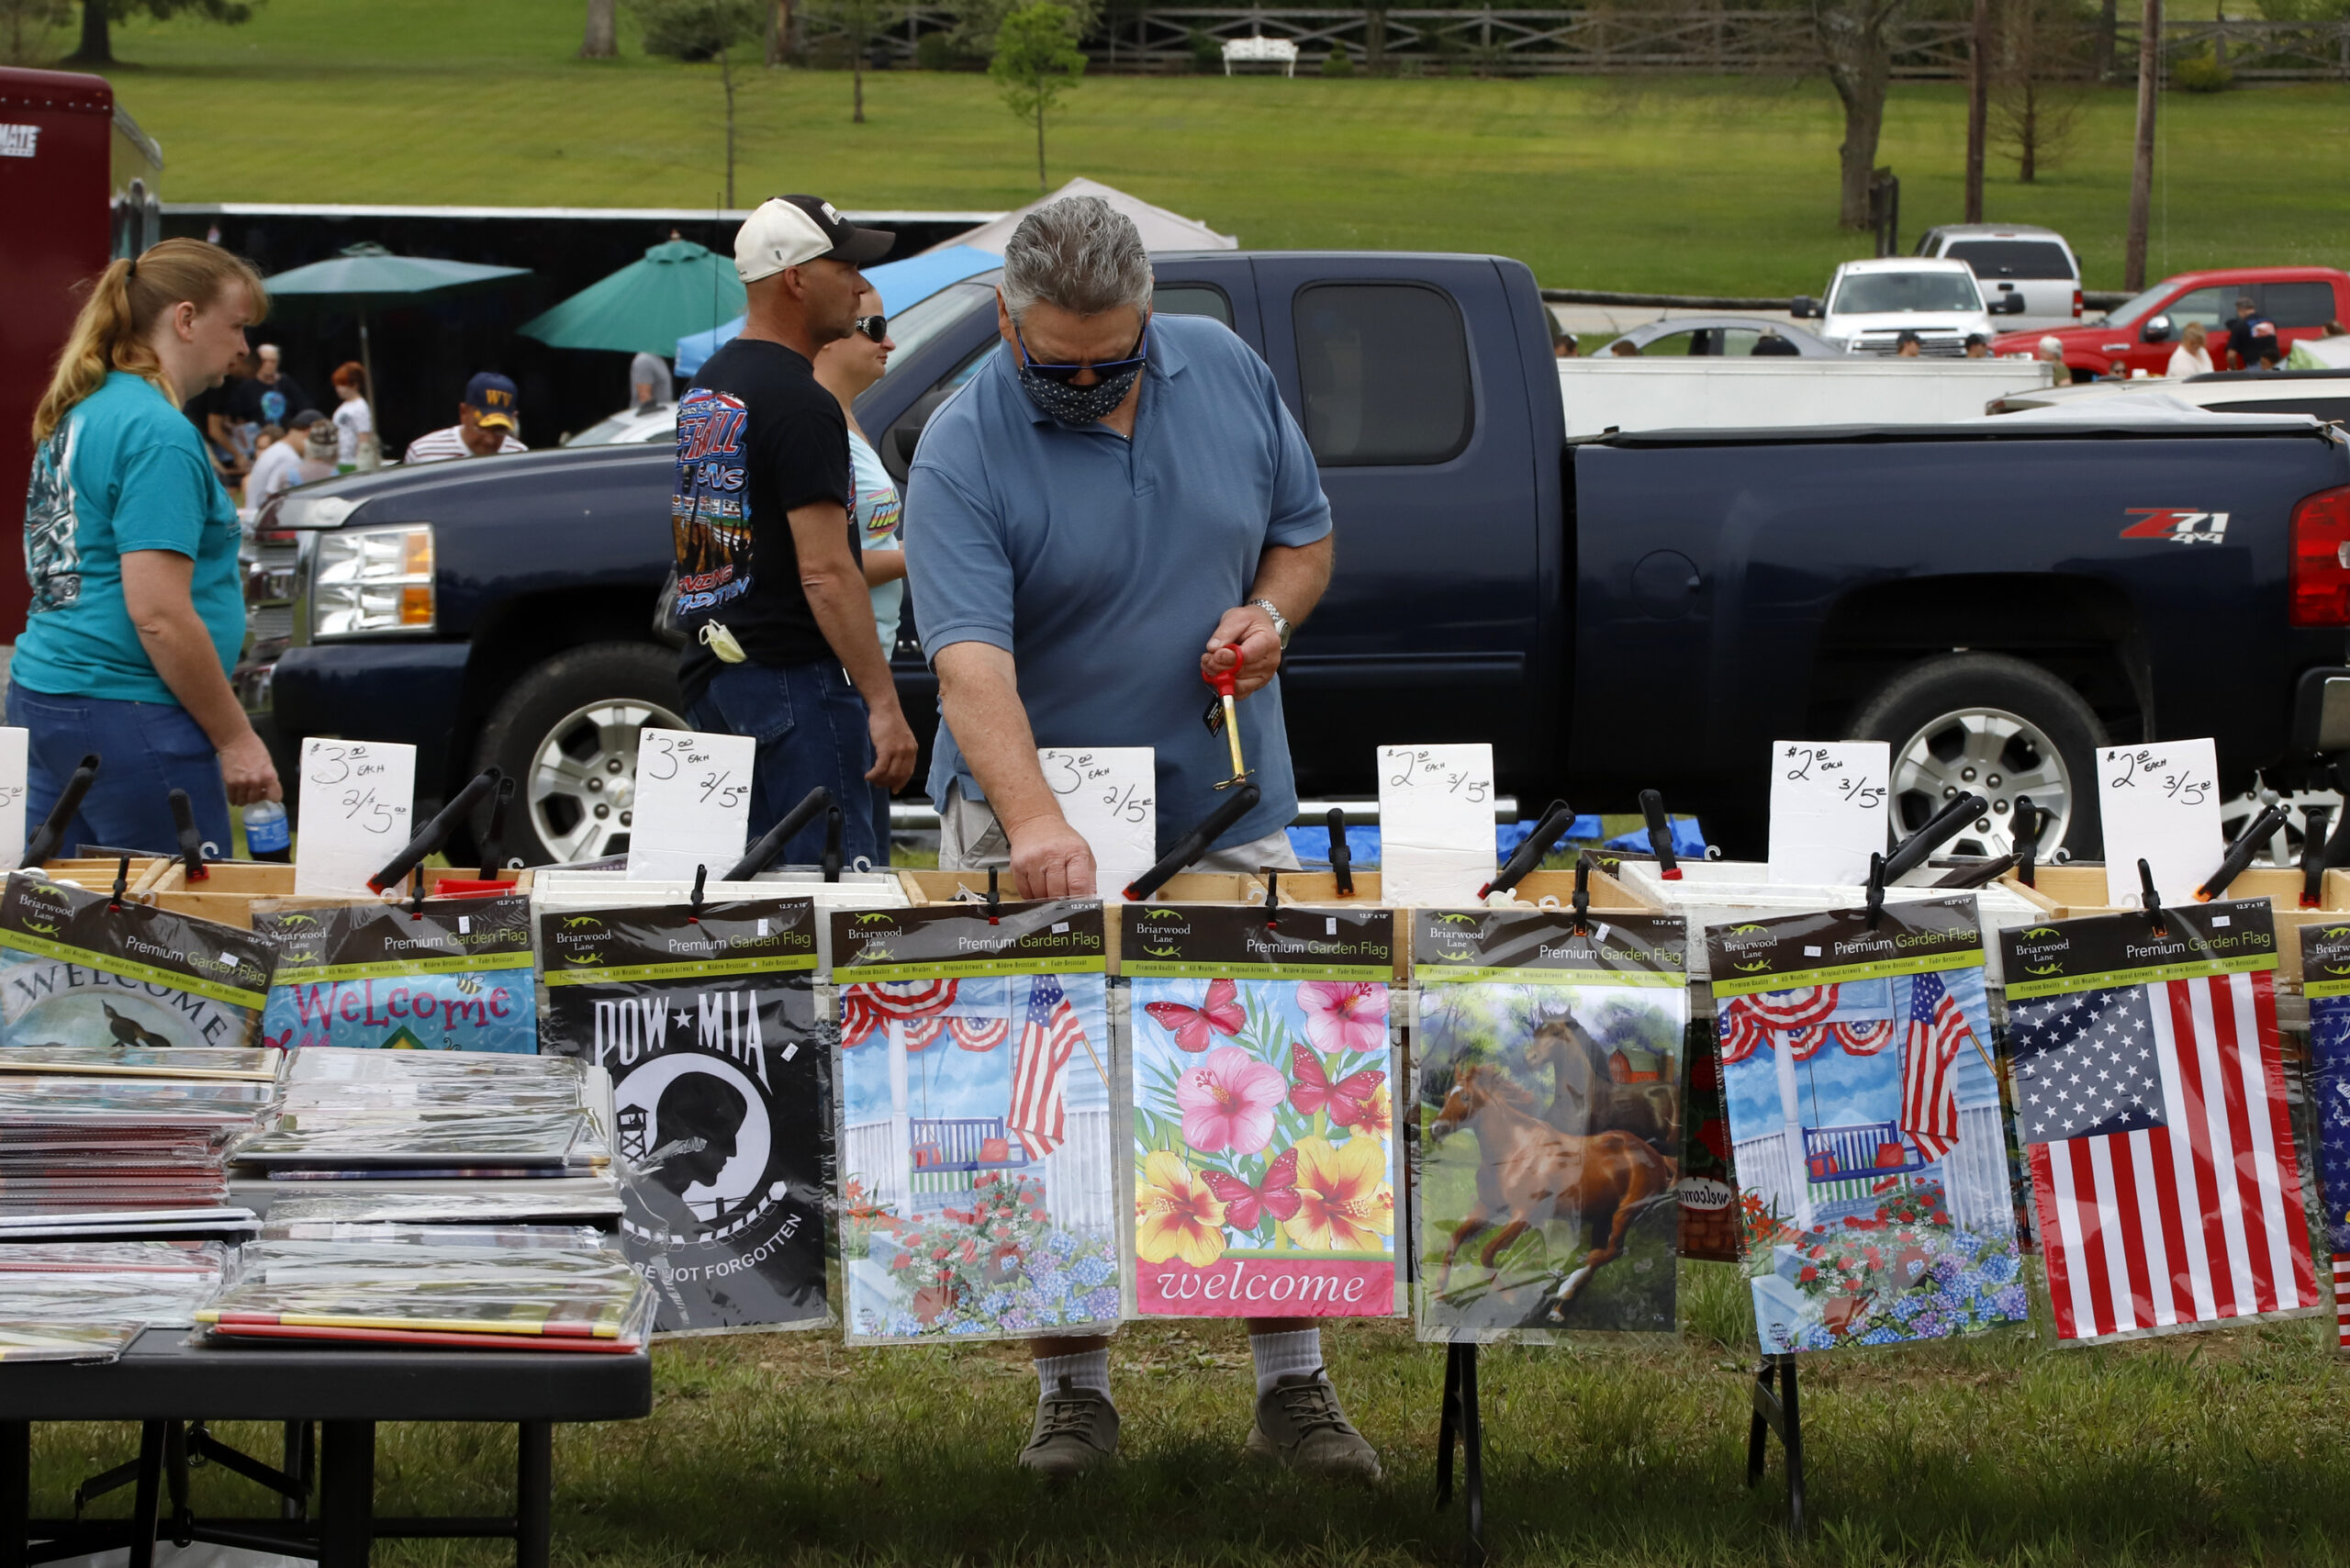 A man looks at items on a vendor's table at a flea market in Farmington, Pa.